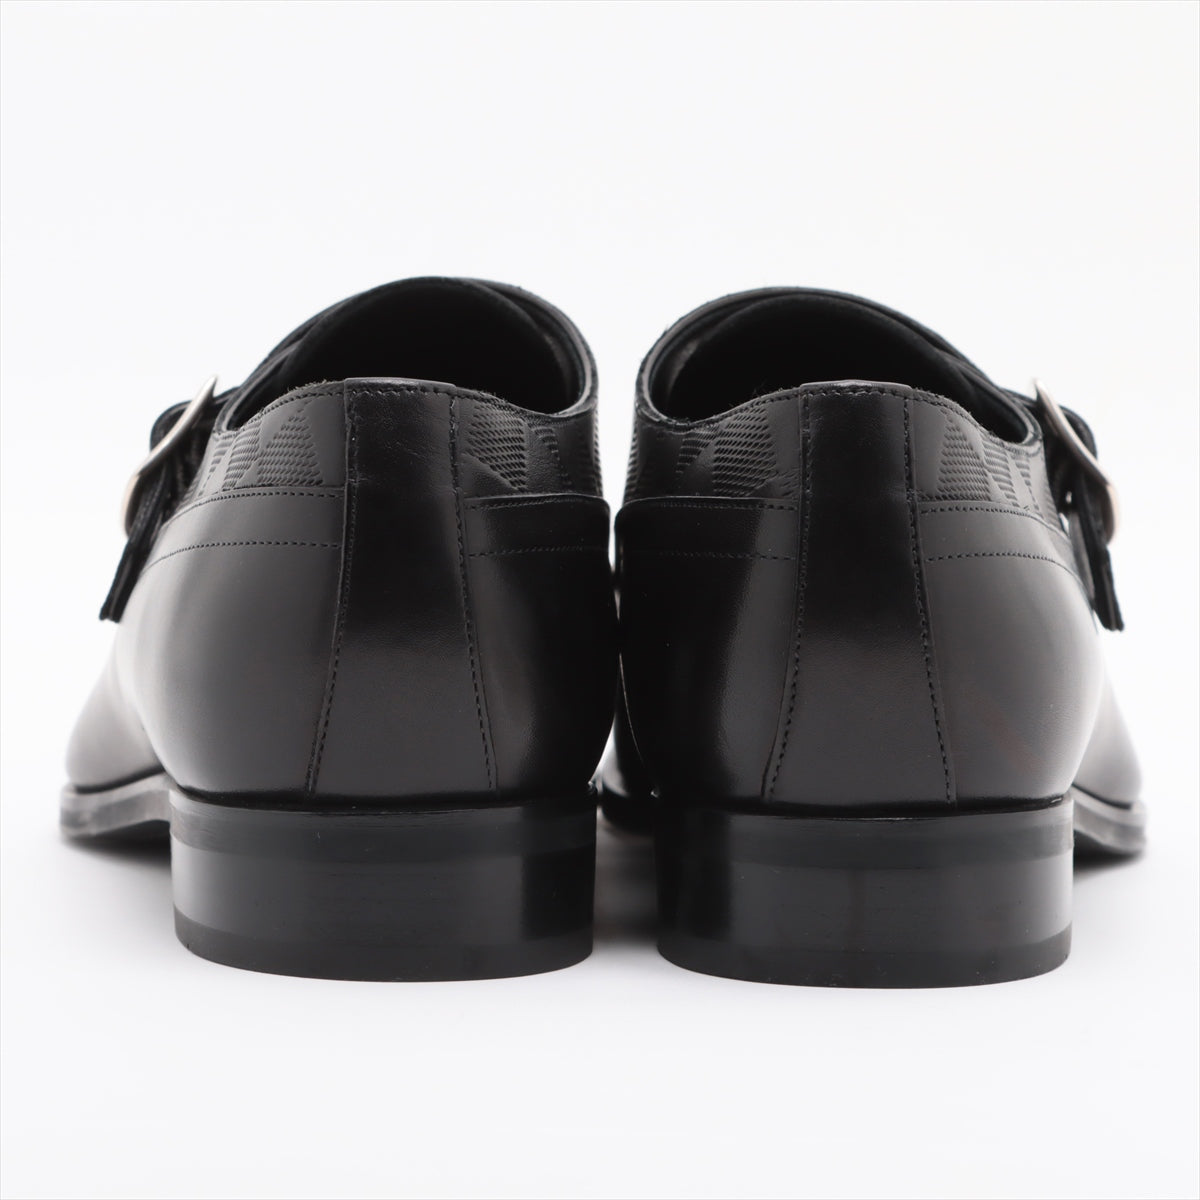 Louis Vuitton 17 years Leather Leather shoes 6 Men's Black ST0137 Damier Single monk strap